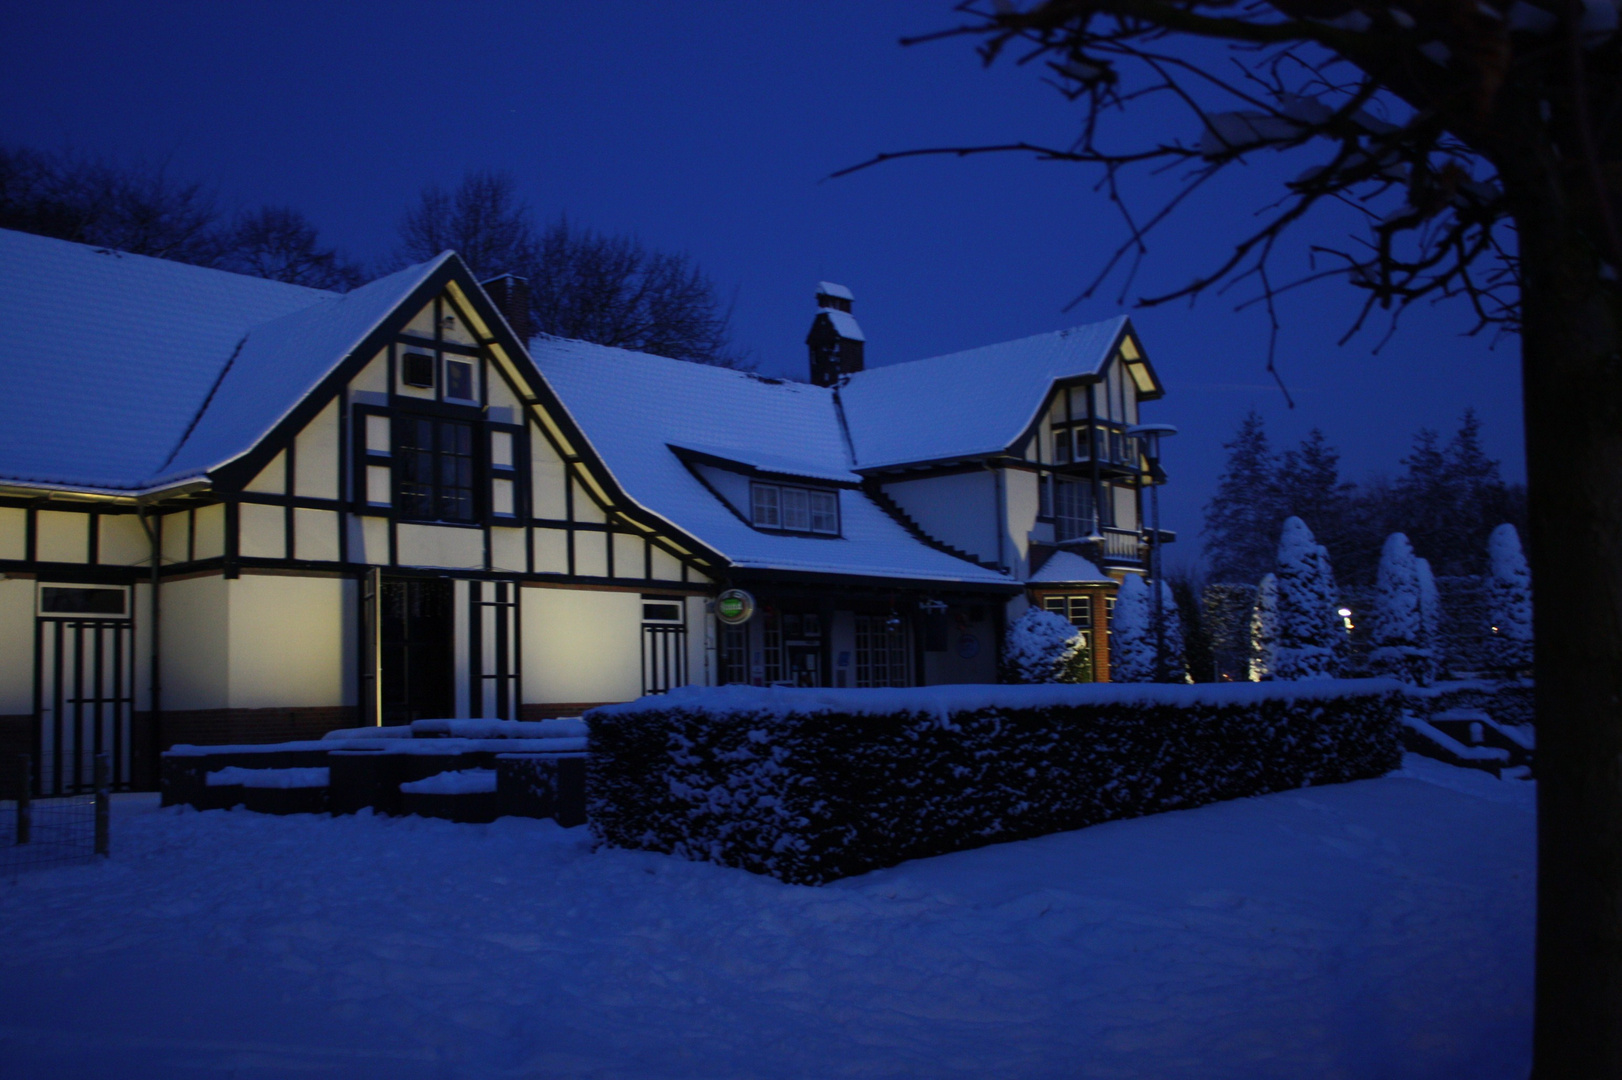 English Farmhouse in the snow